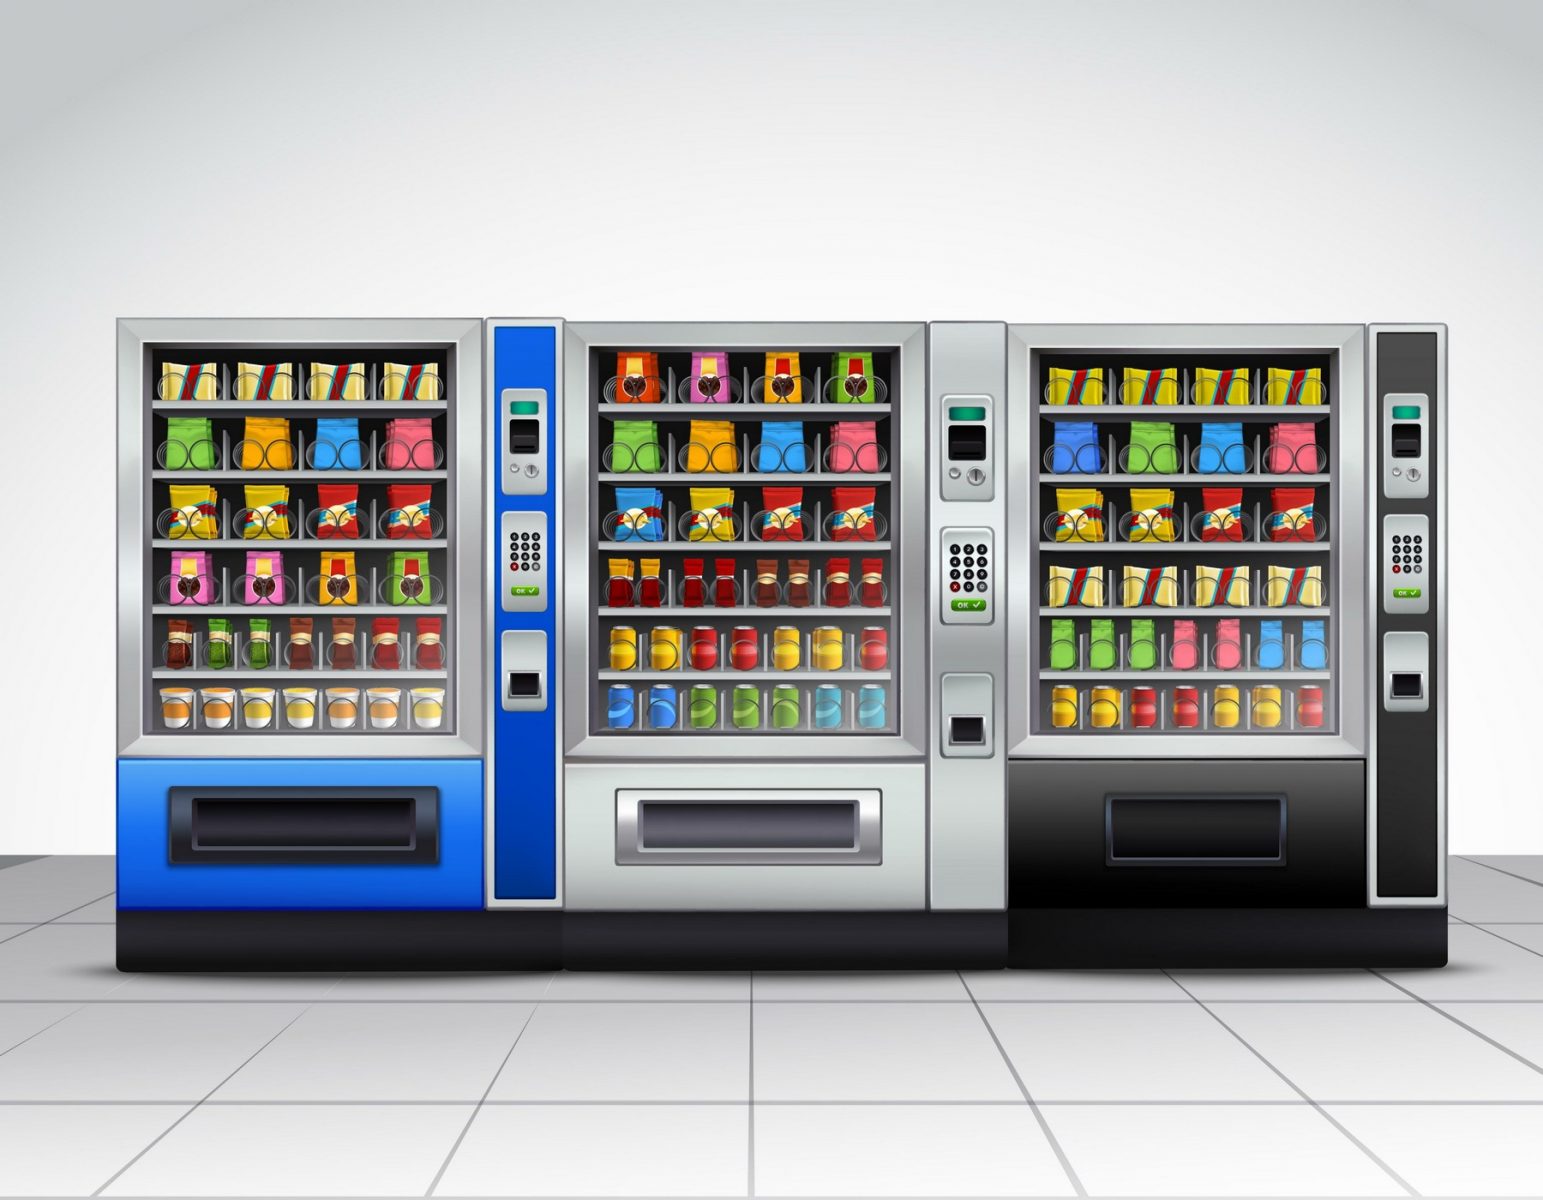 vending machines for sale houston